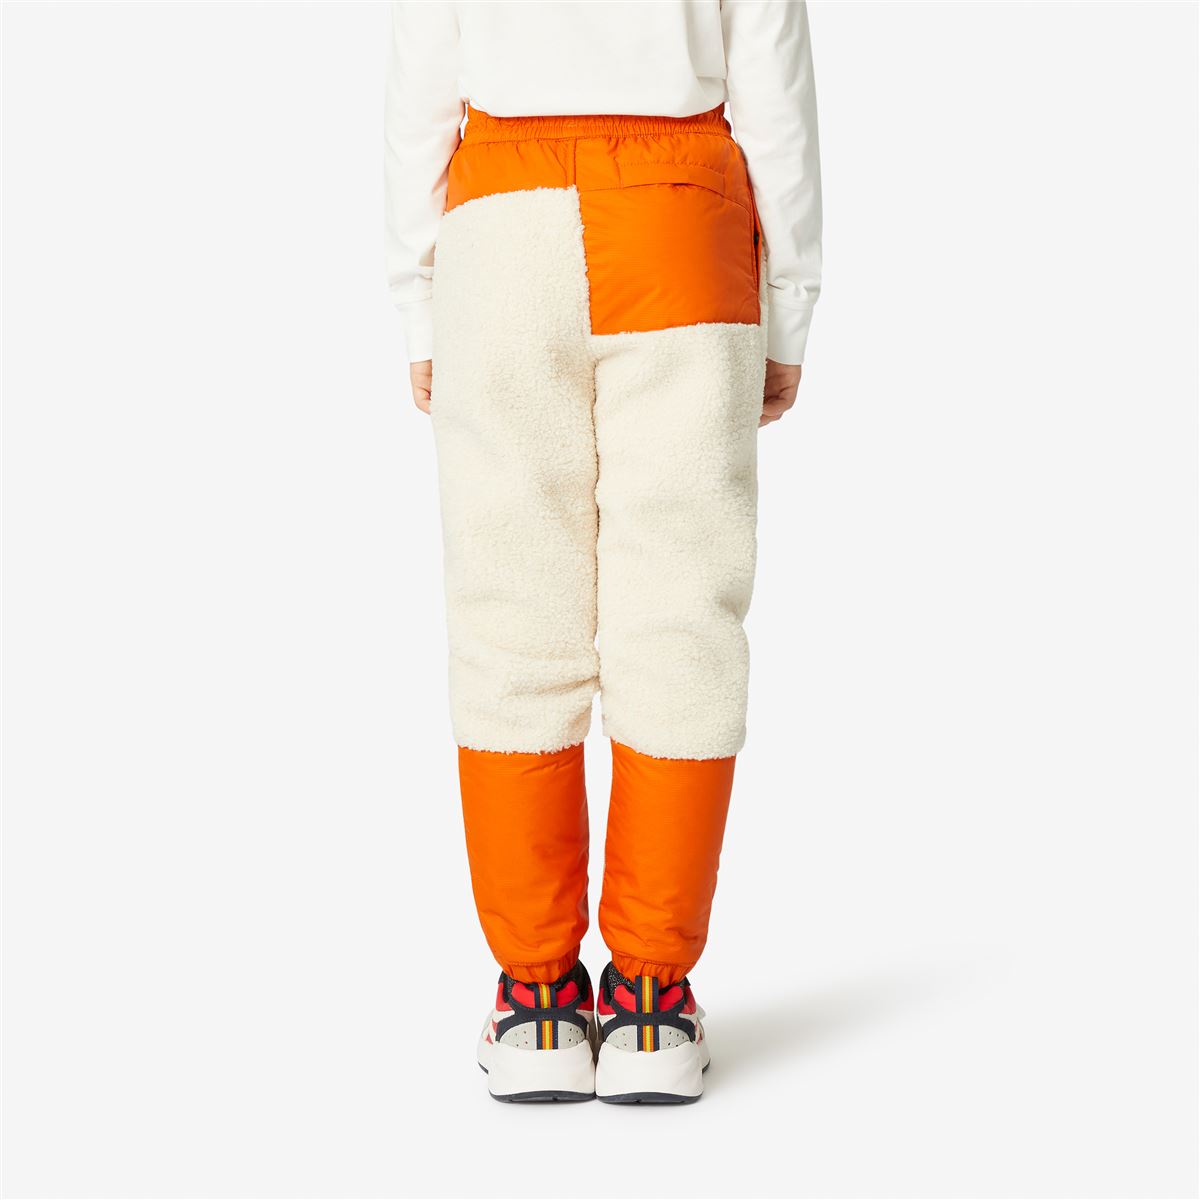 Kael Orsetto - Kids Lined Pants in Ecru - Orange Rust